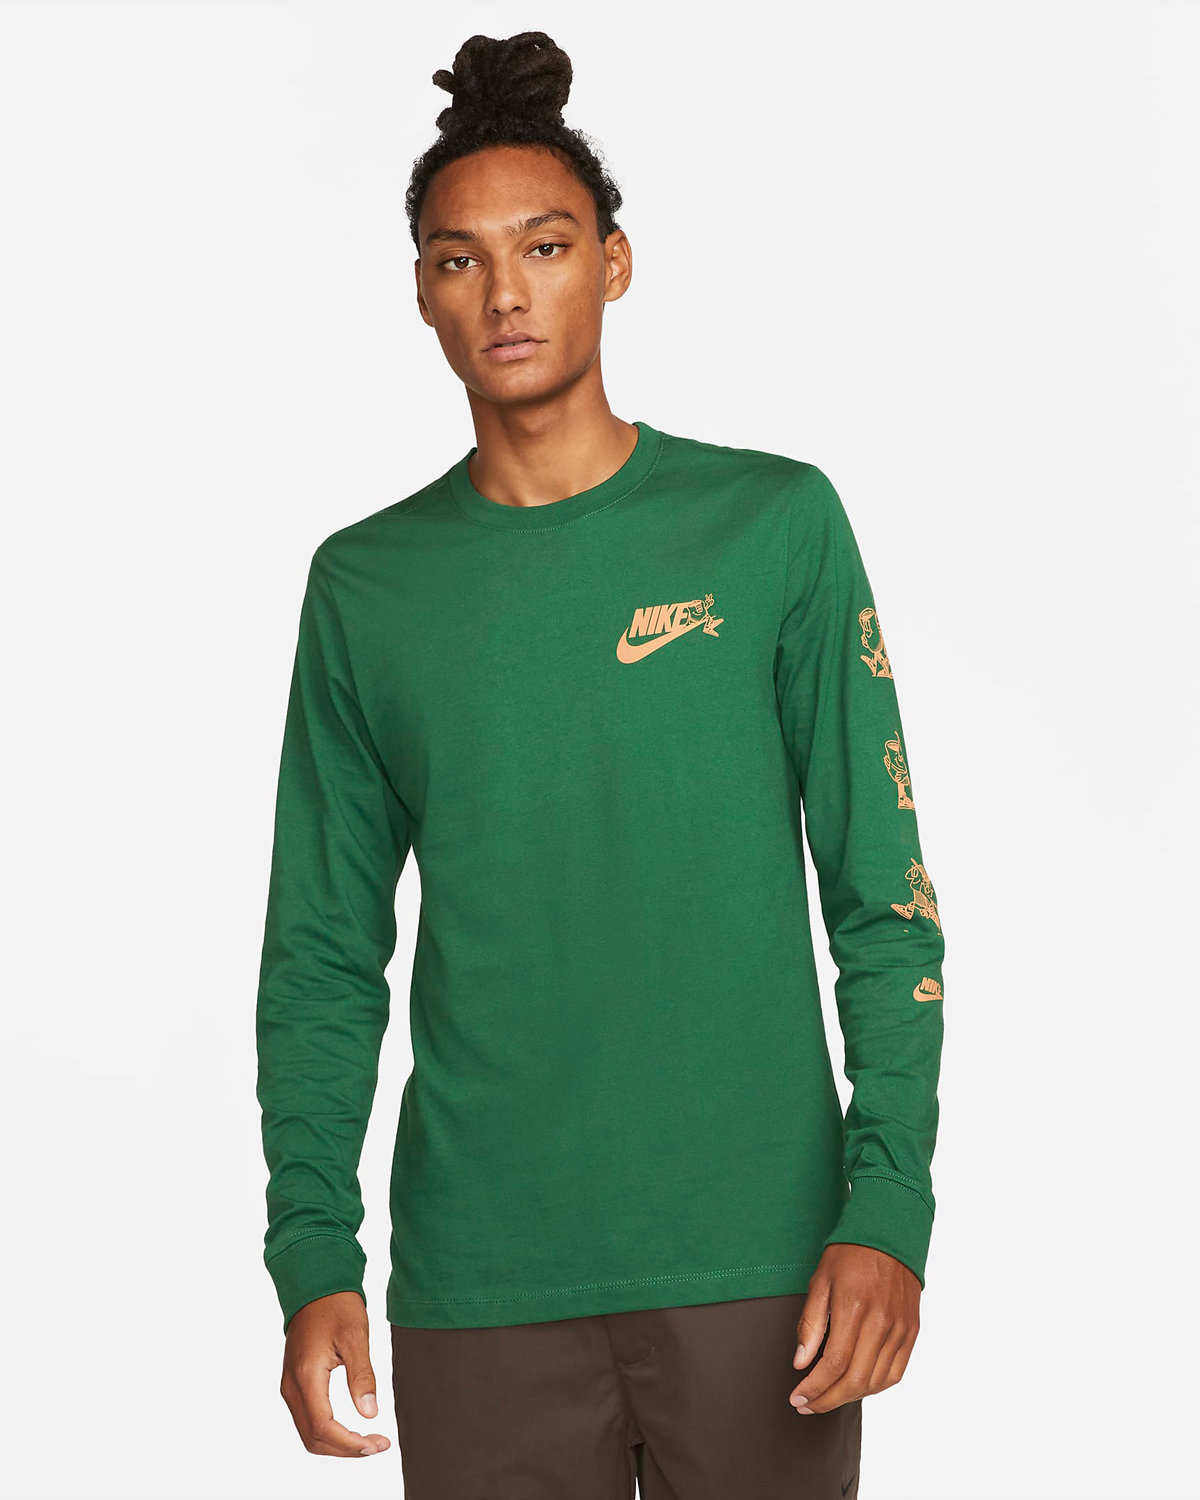 Nike-Sportswear-Long-Sleeve-T-Shirt-Gorge-Green-1